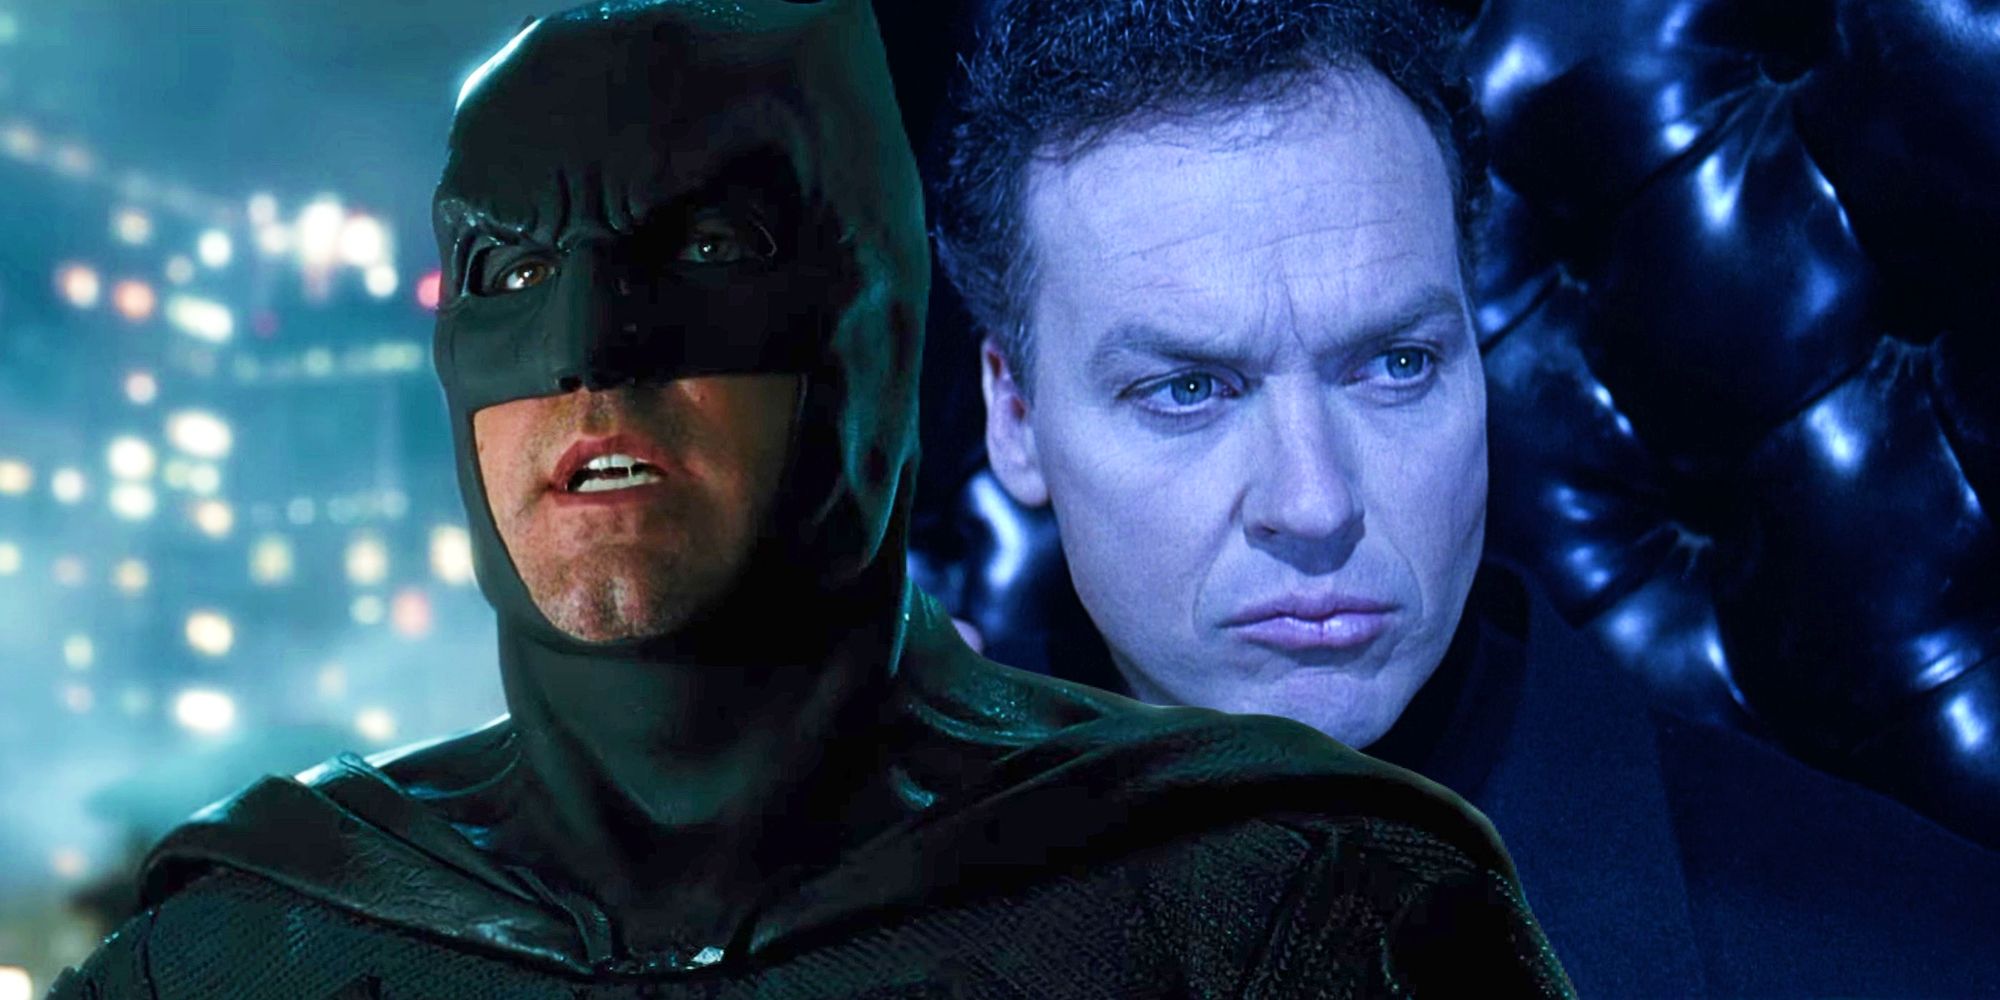 Ben Affleck as Batman in Justice League and Michael Keaton as Batman in Batman Returns